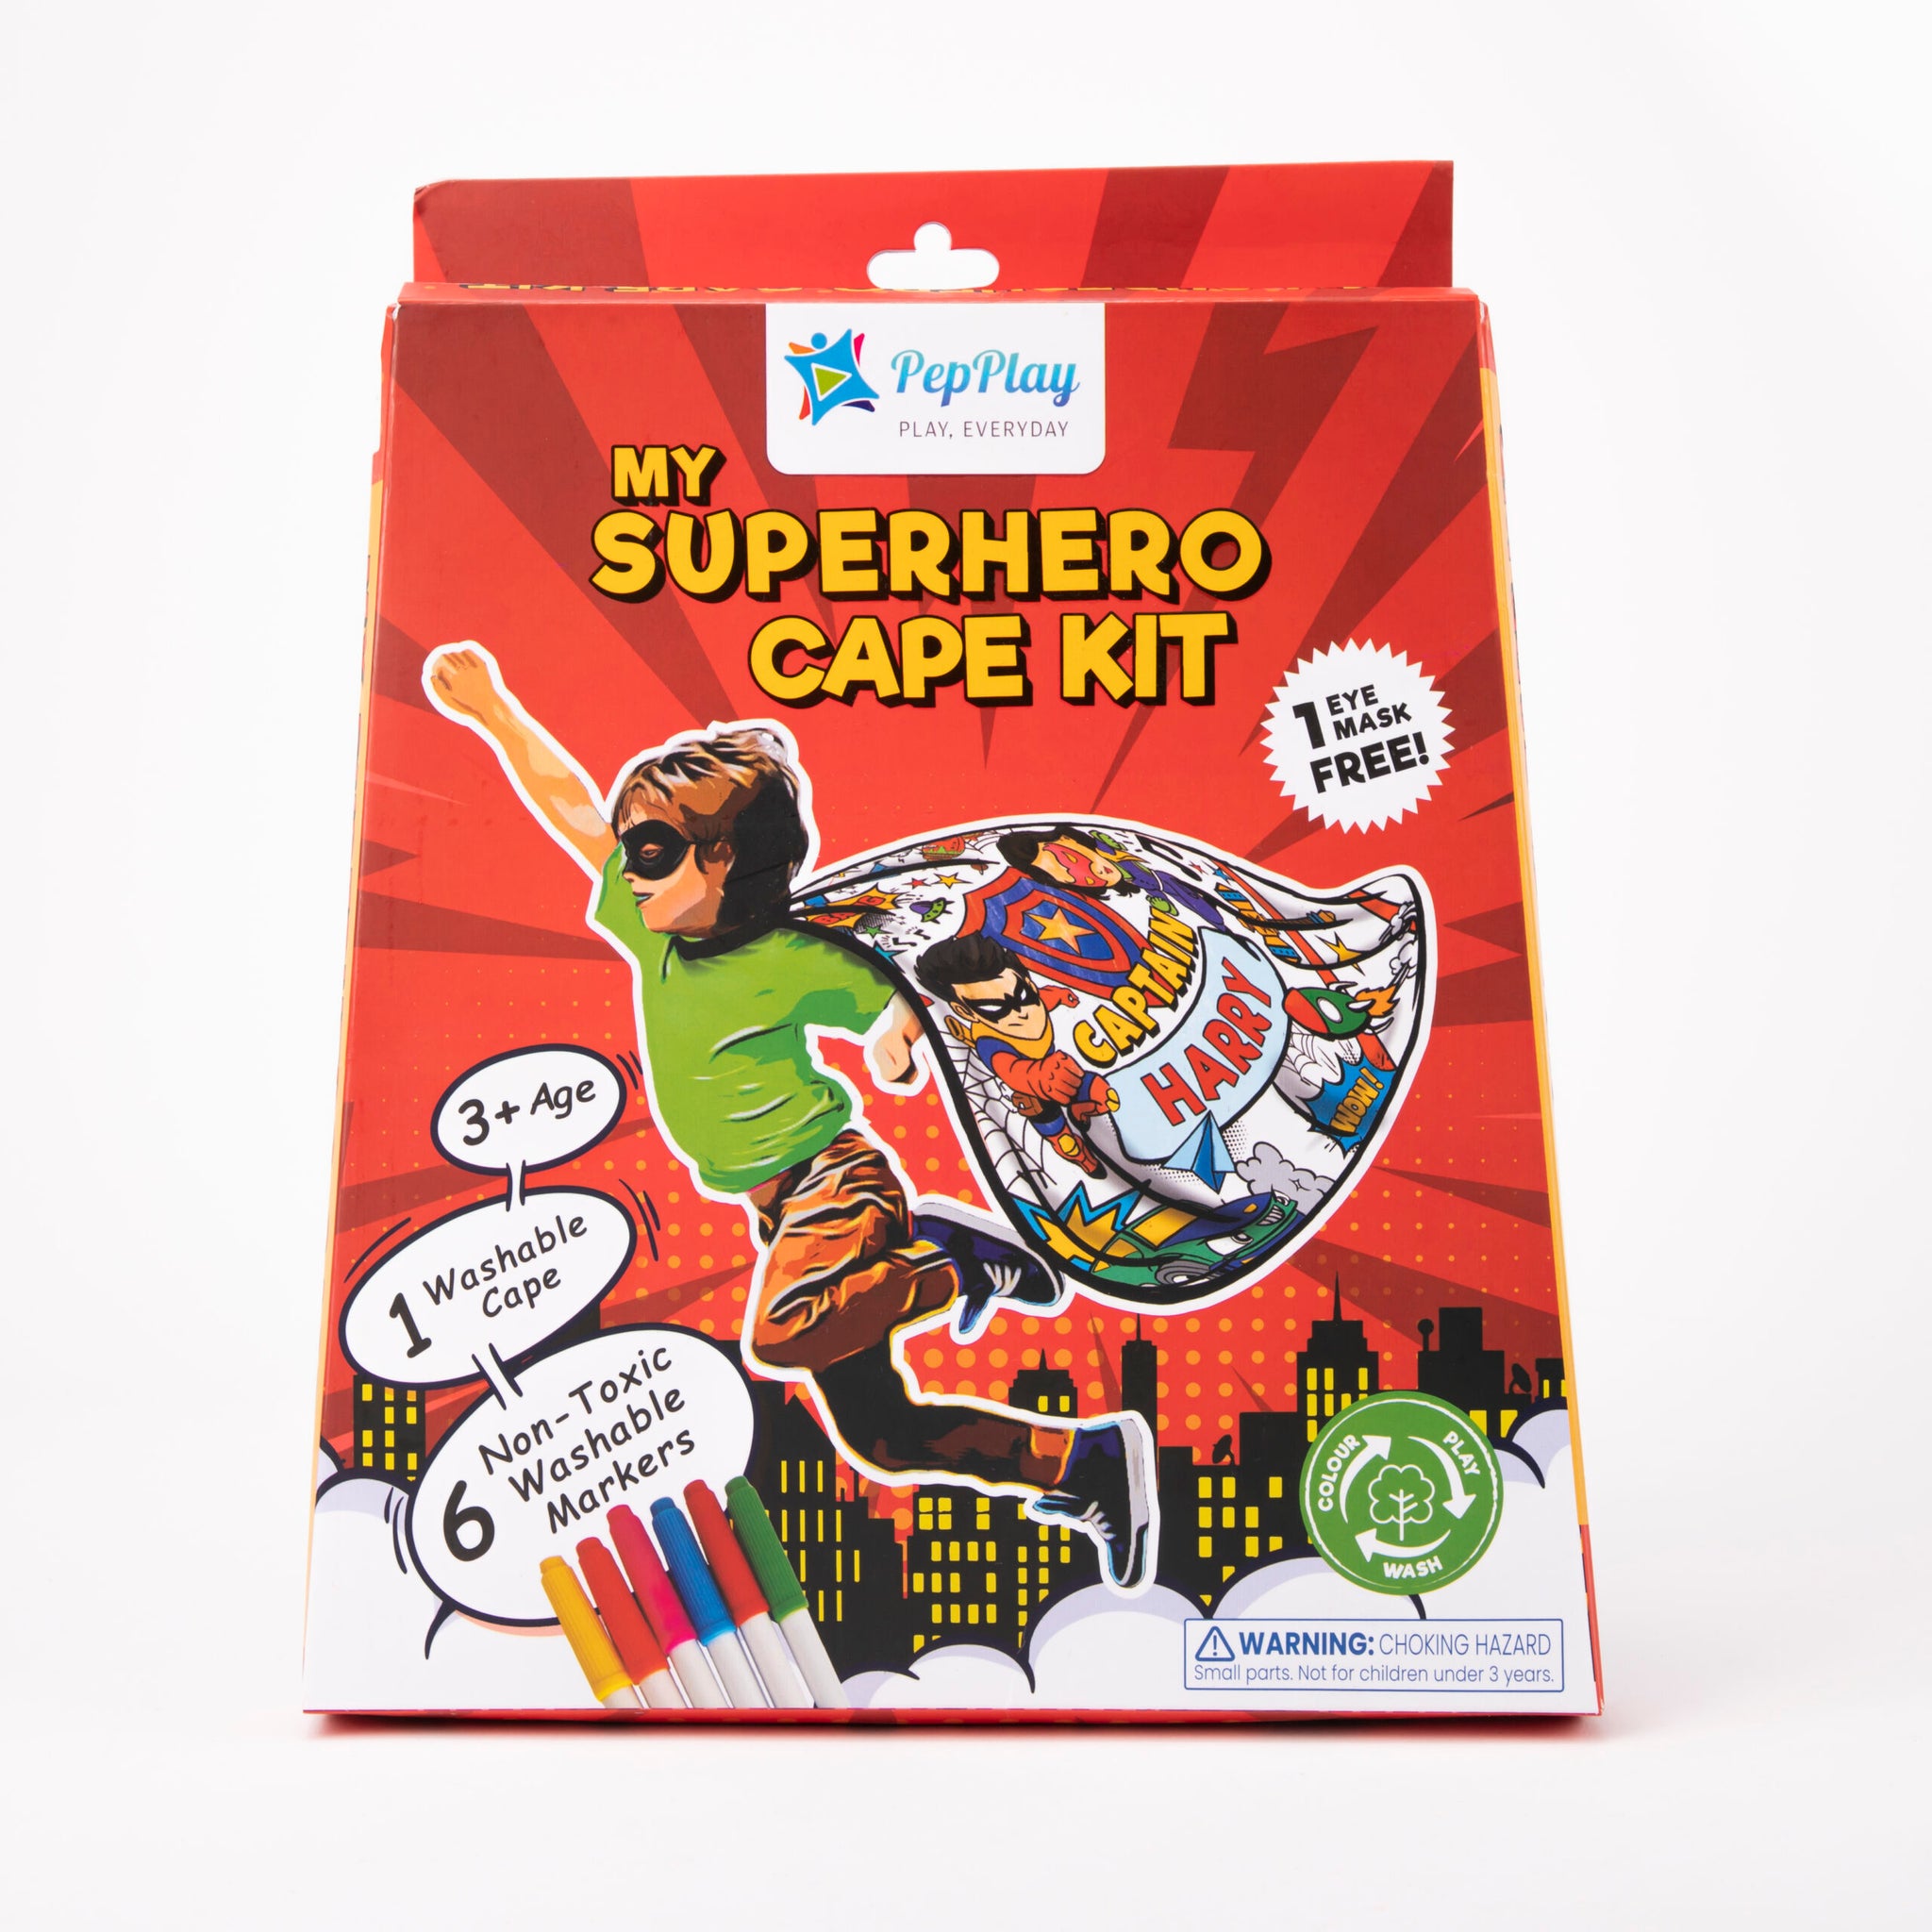 My SuperHero Cape Kit